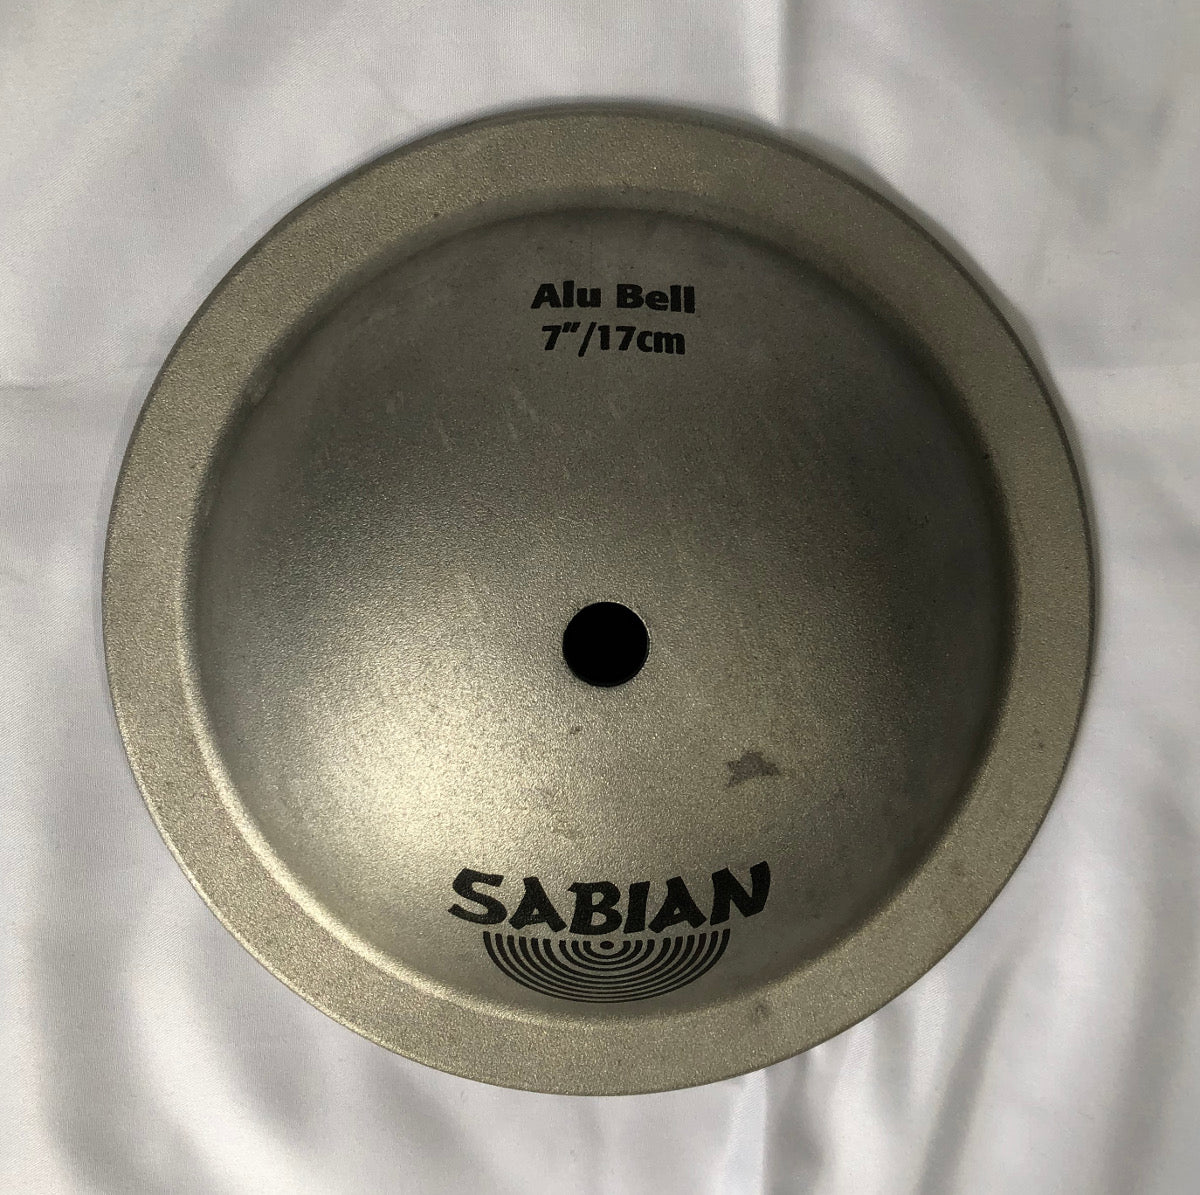 Sabian 7" Alu Bell